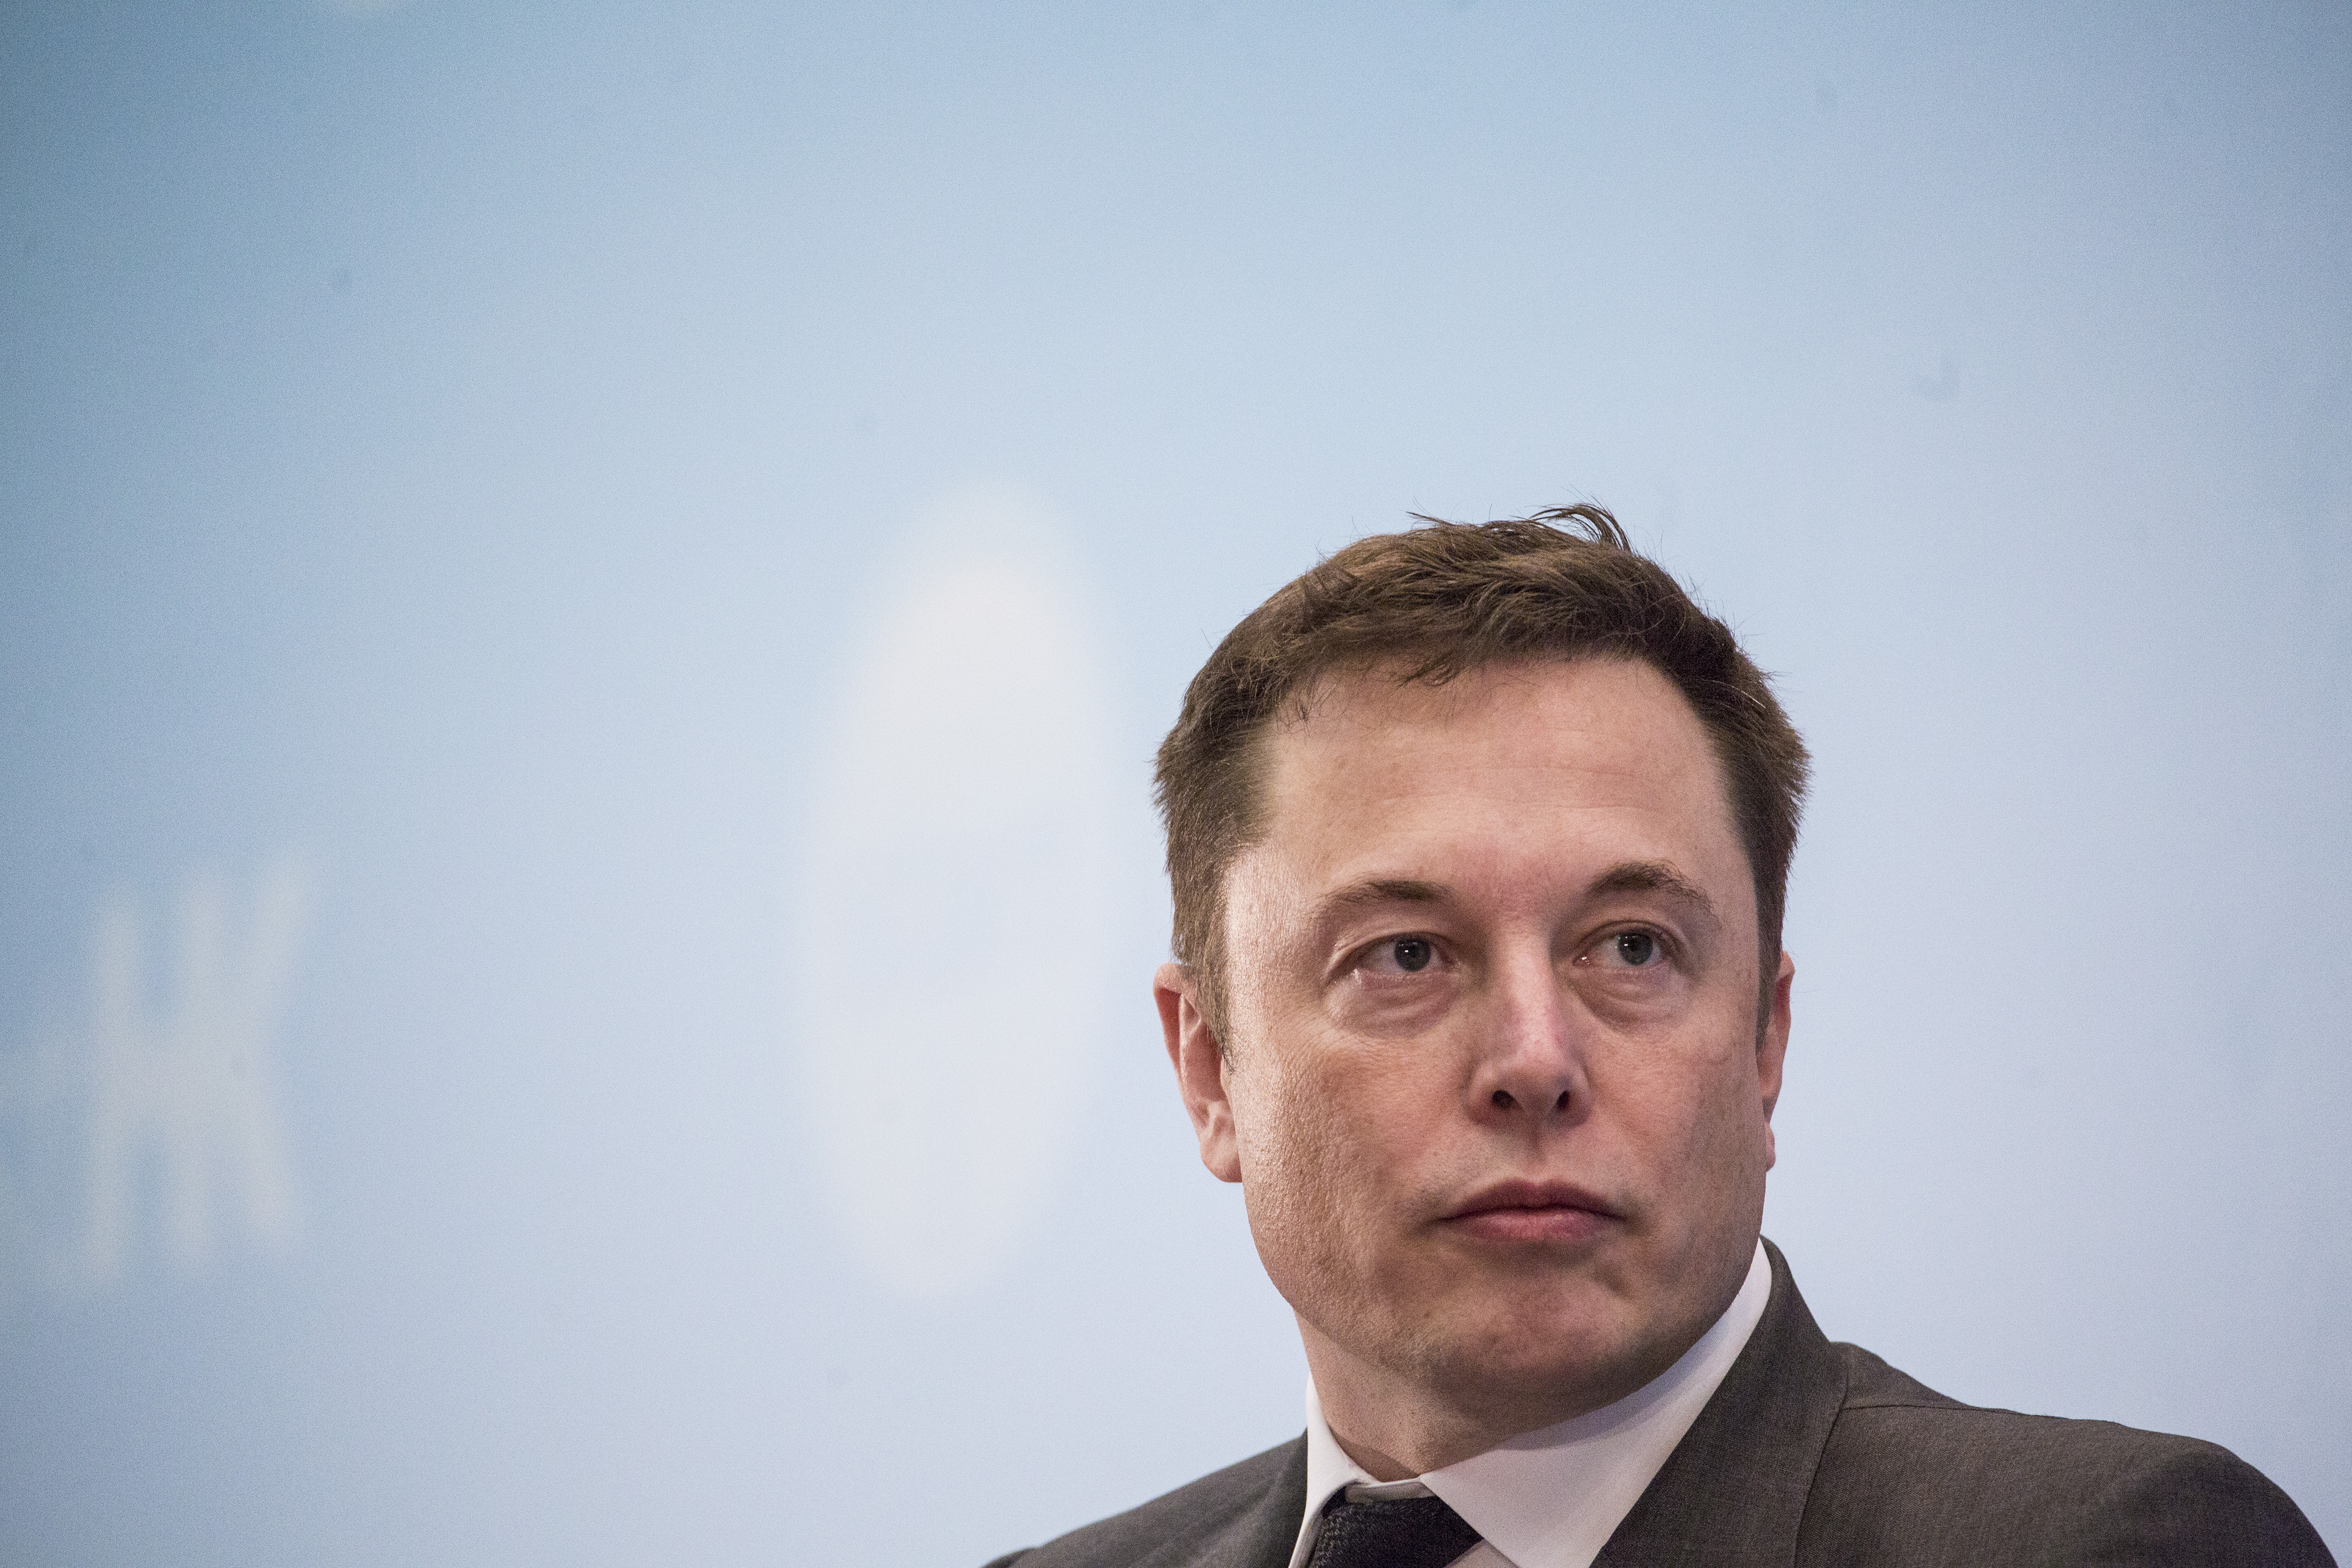 Tesla Founder Elon Musk Lost $800 Million This Week